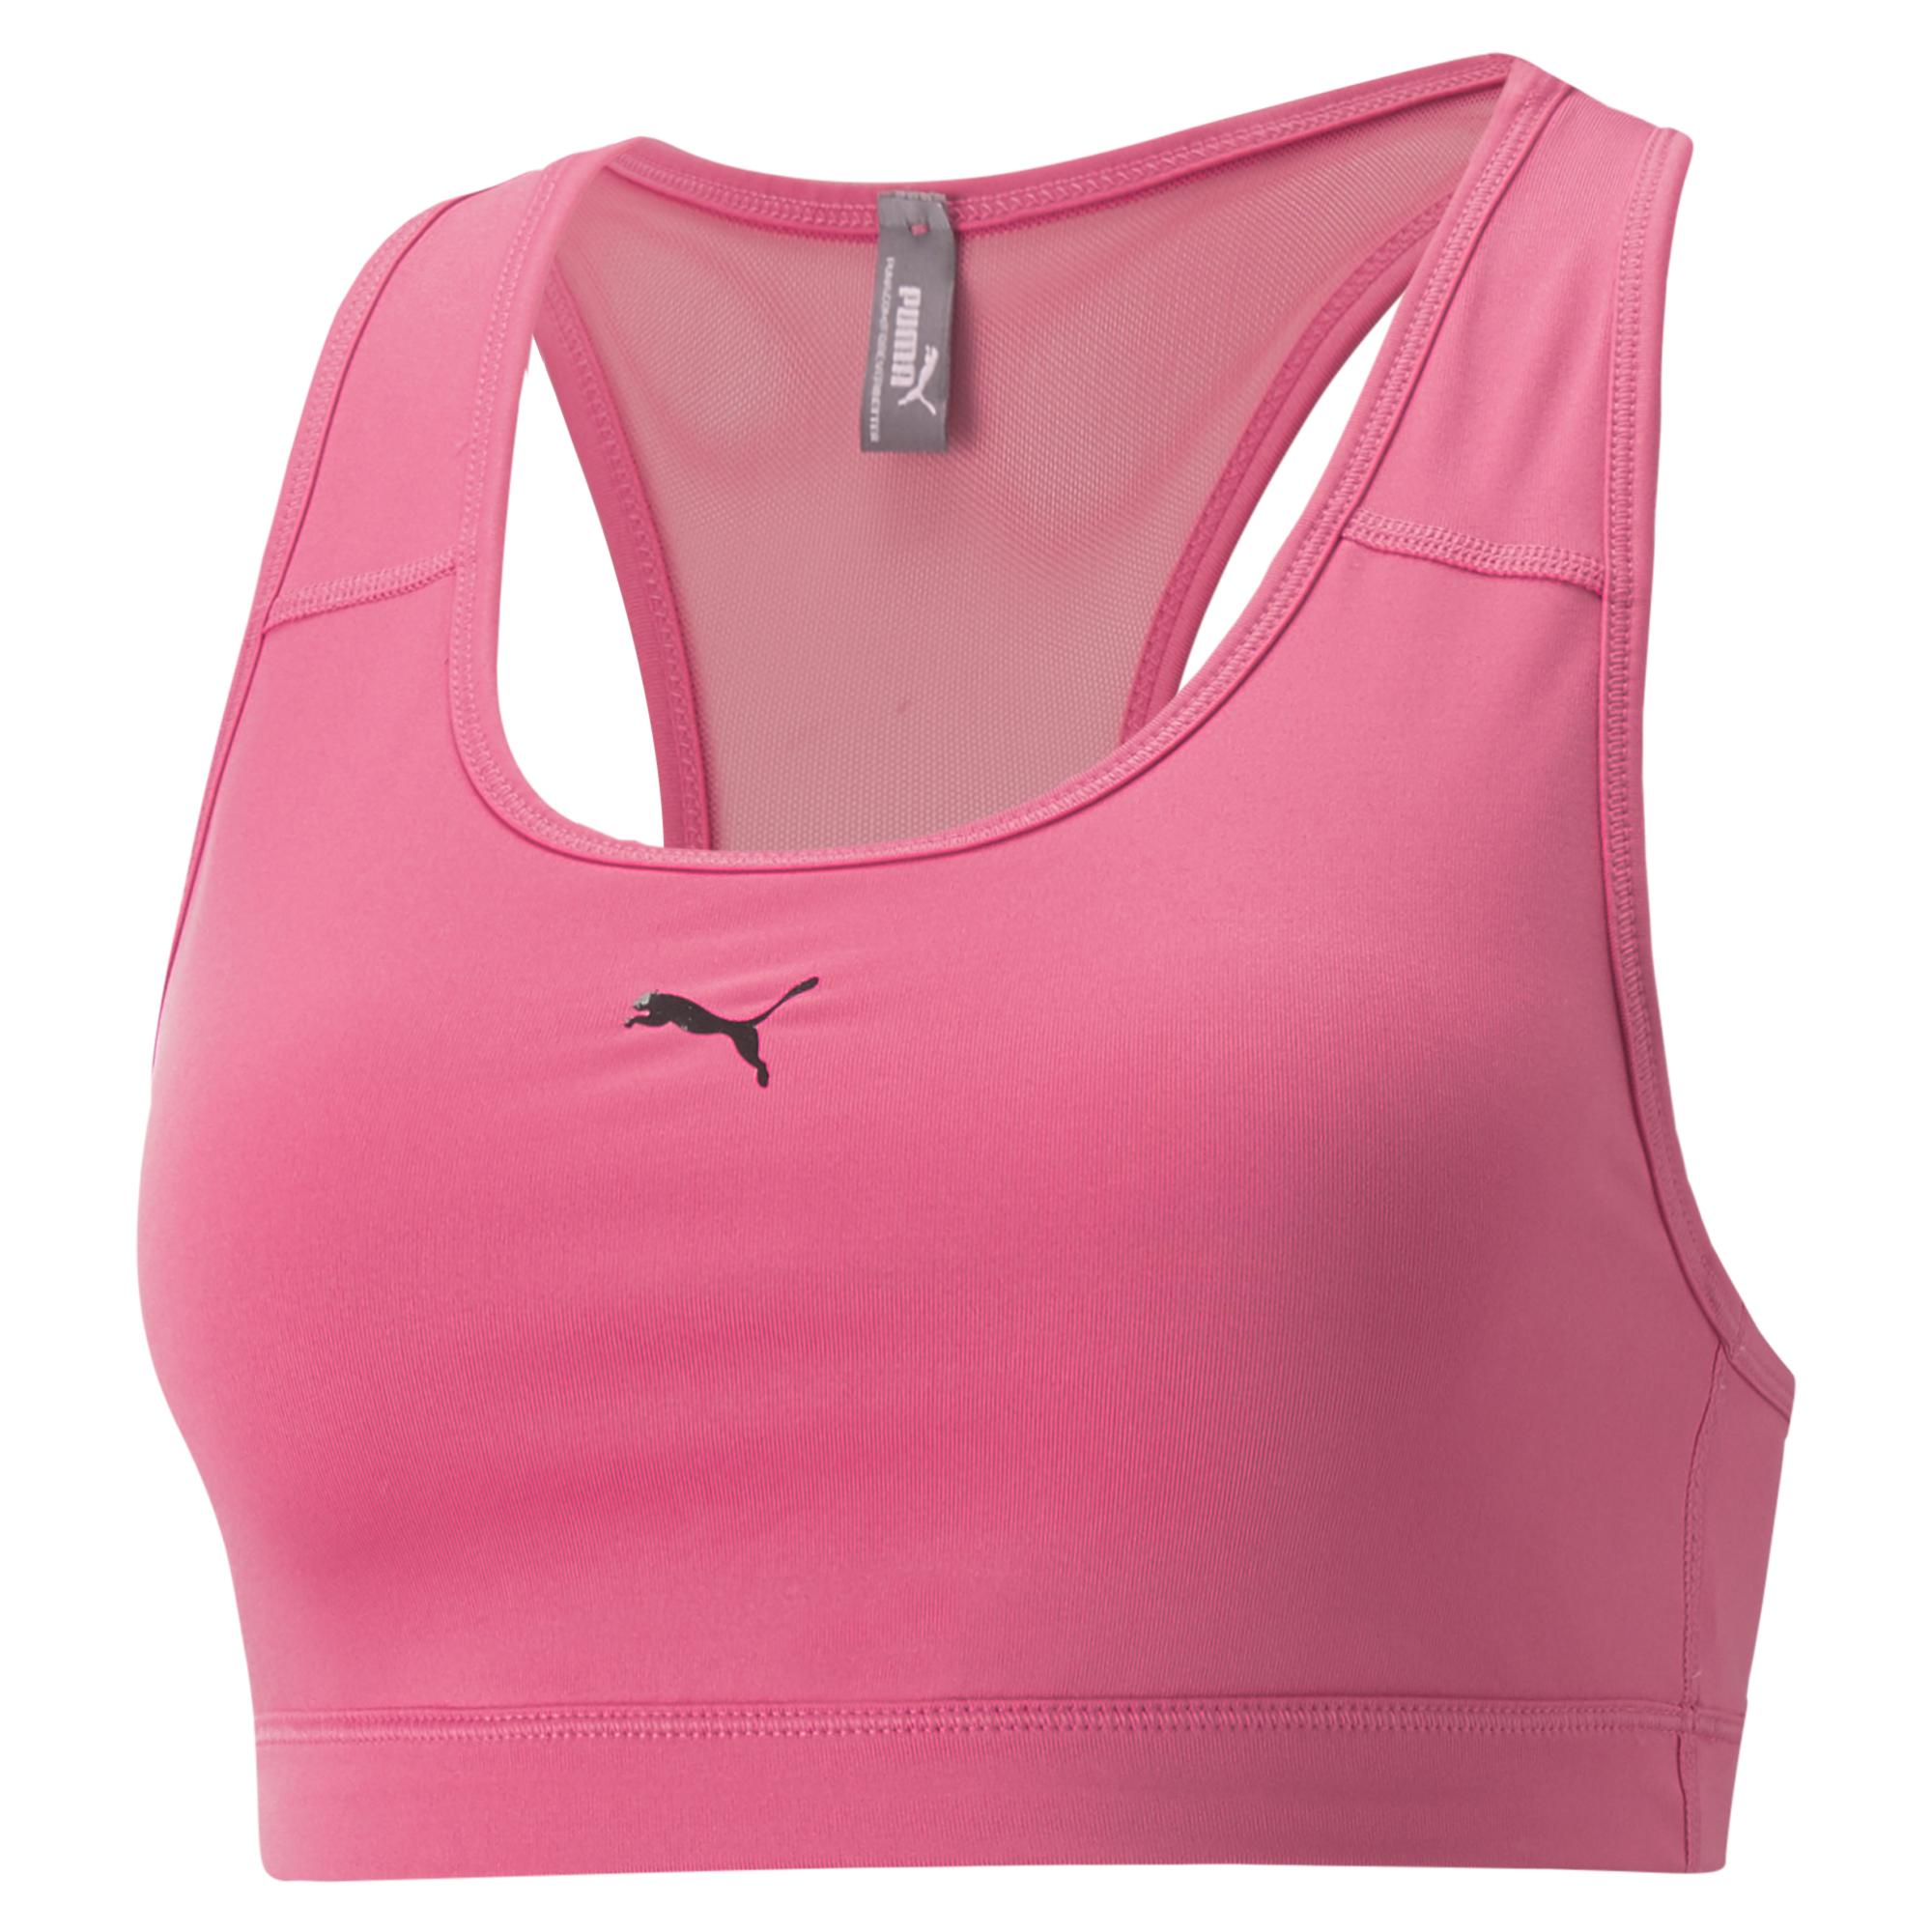 Puma Medium support sports bra - garnet rose/pink 